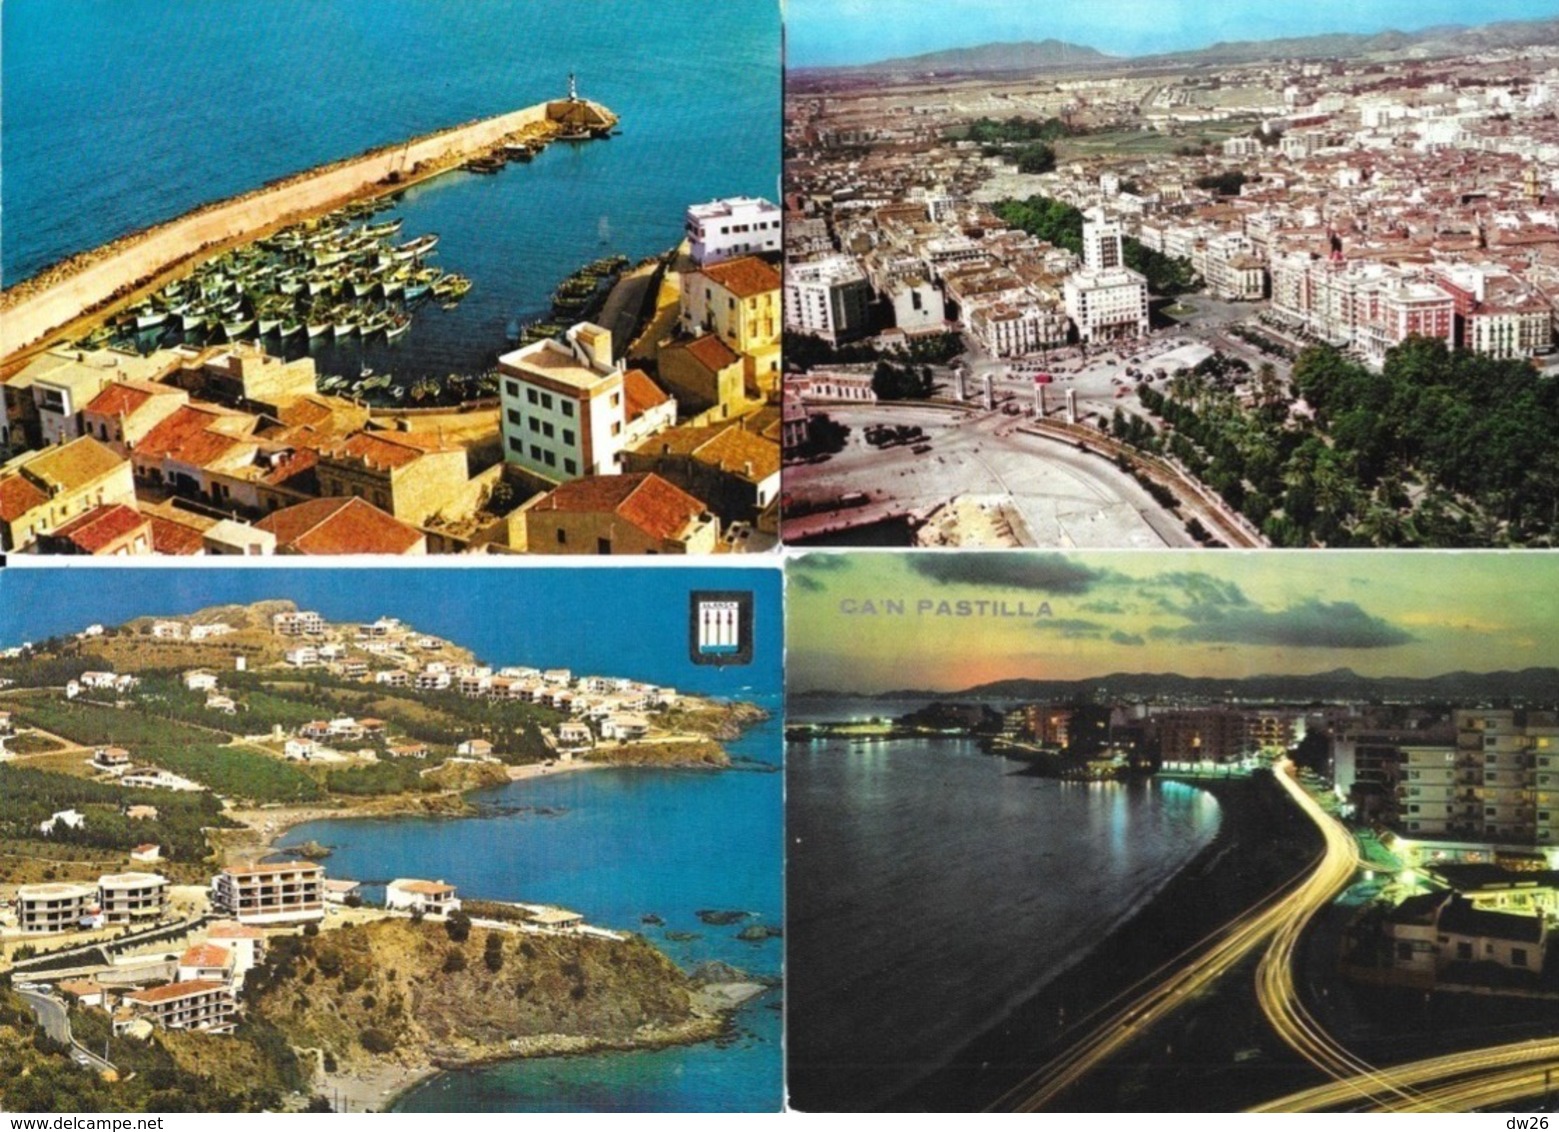 Lot n° 114 de 112 cartes CPM et CPSM de l'Espagne - Costa Brava, Barcelona, Avila, Toledo, Mallorca...